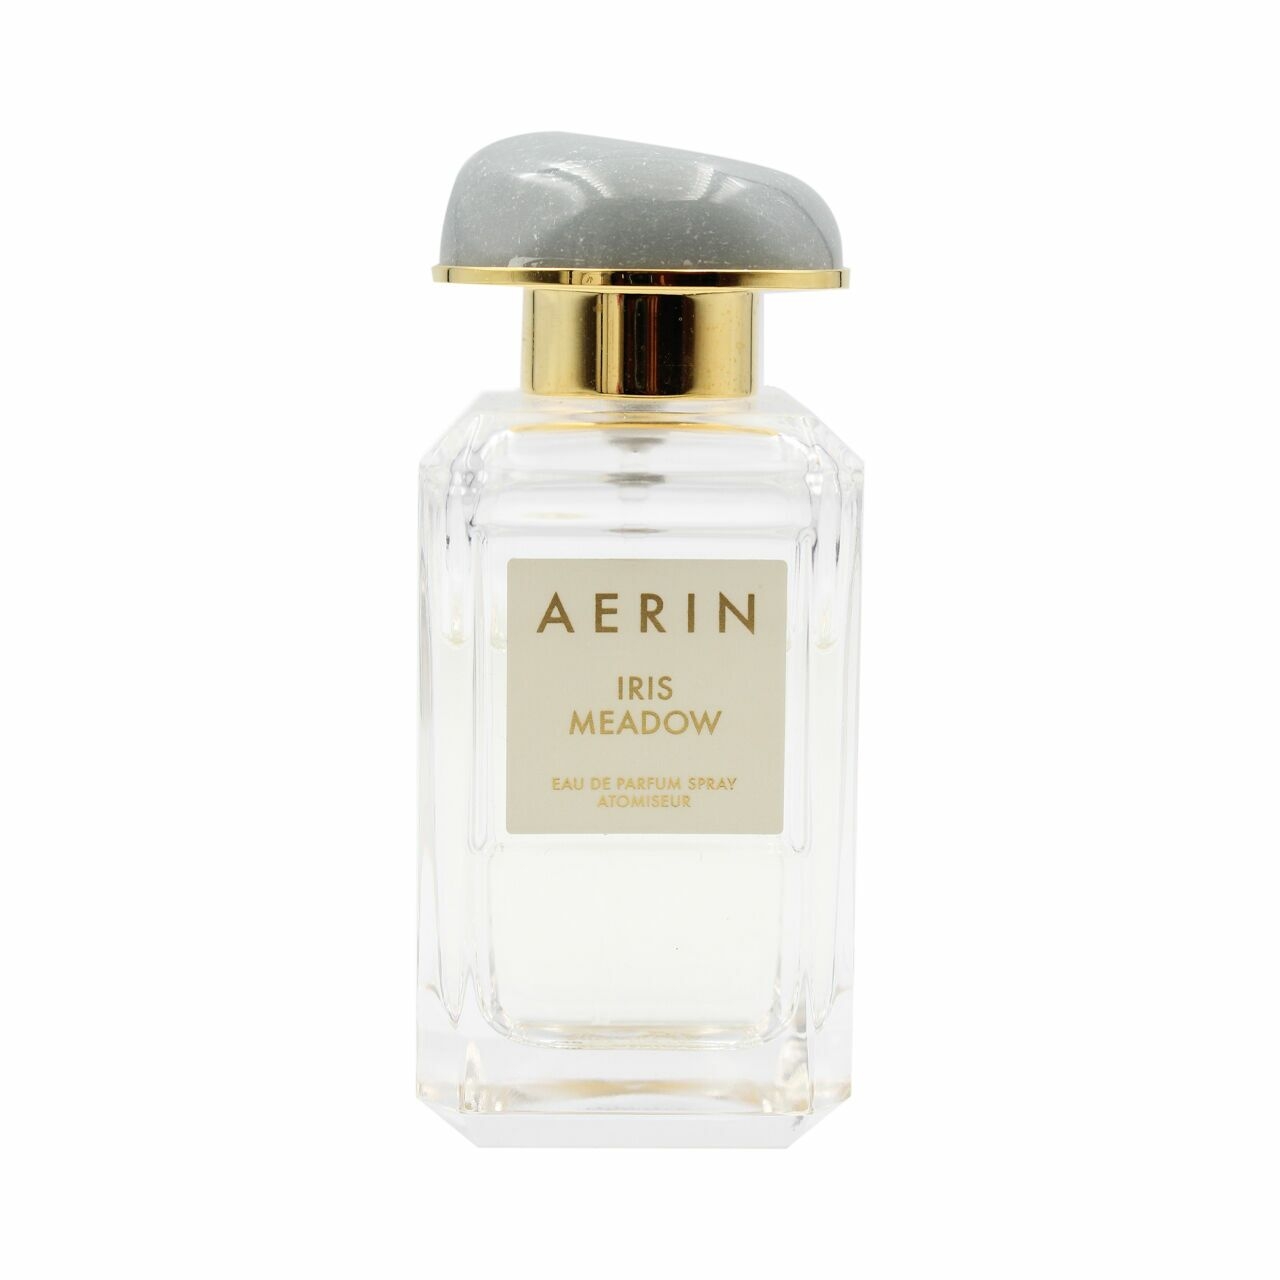 AERIN Iris Meadow 50 ml Parfum Spray